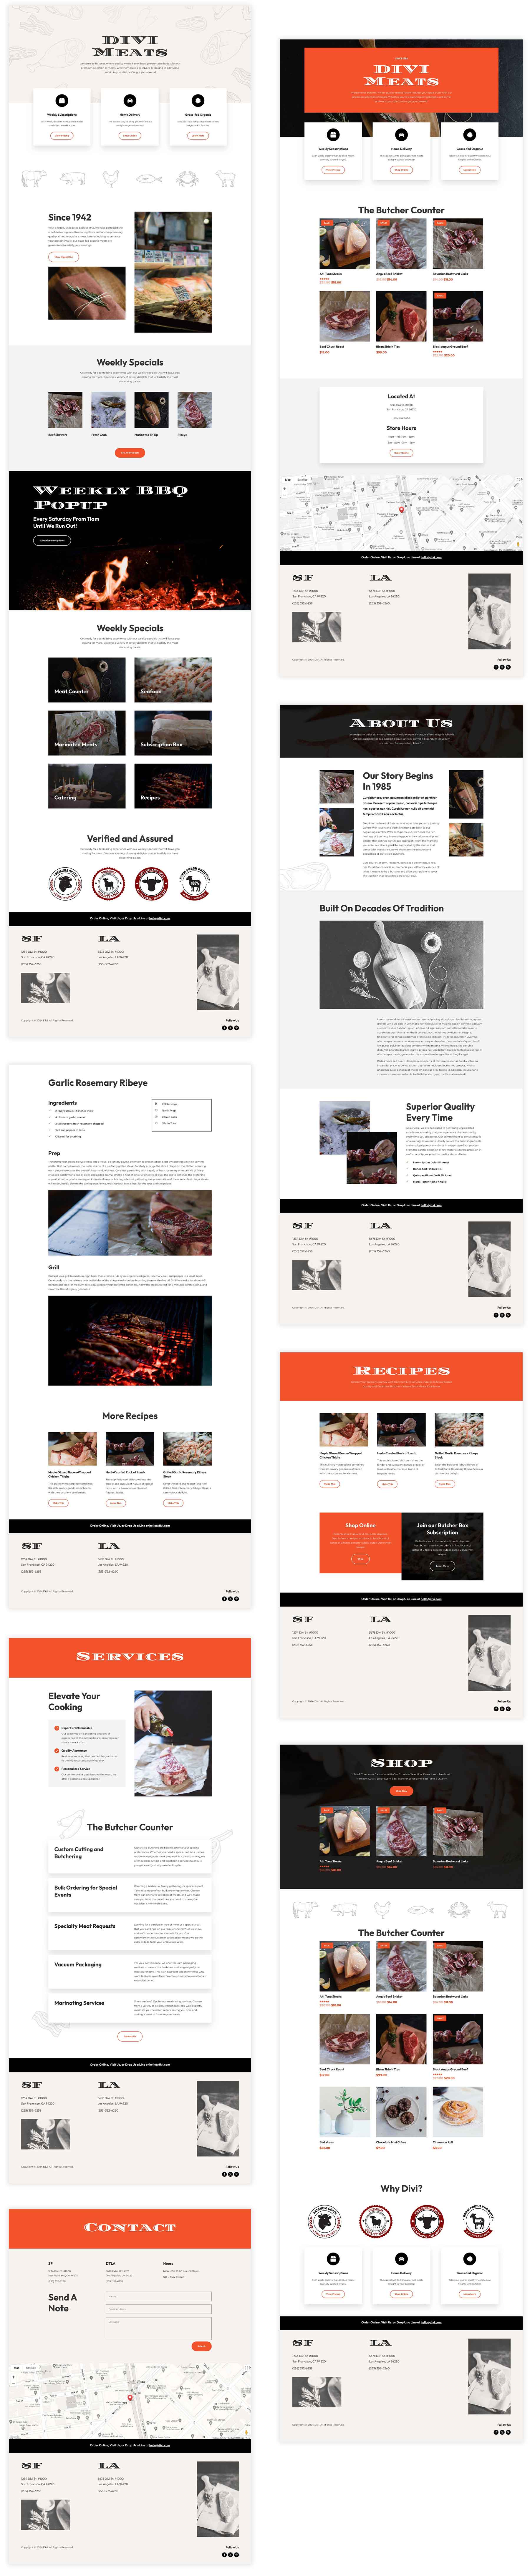 Butcher Shop layout pack